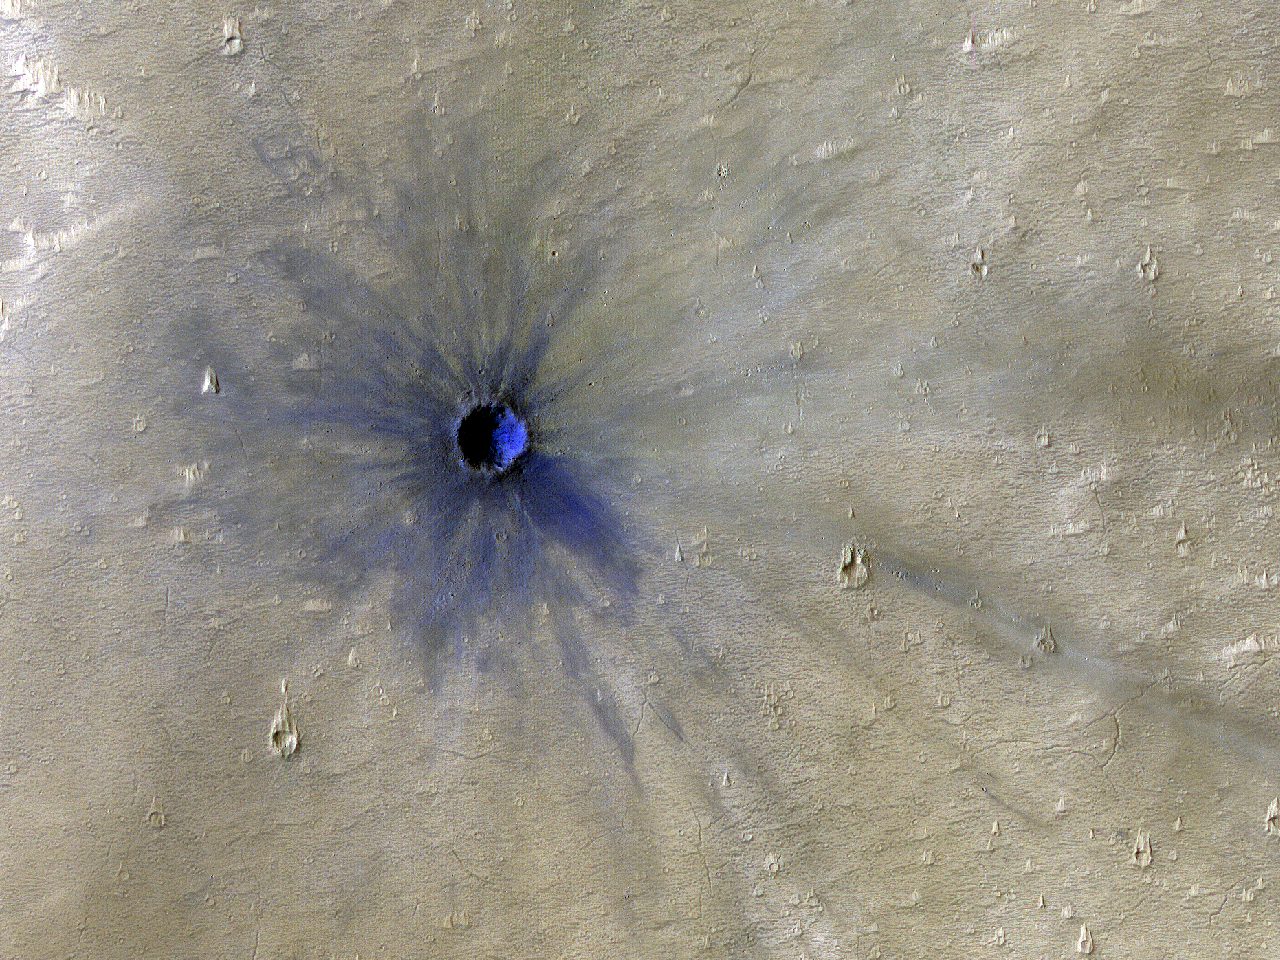 An Impact North of Valles Marineris